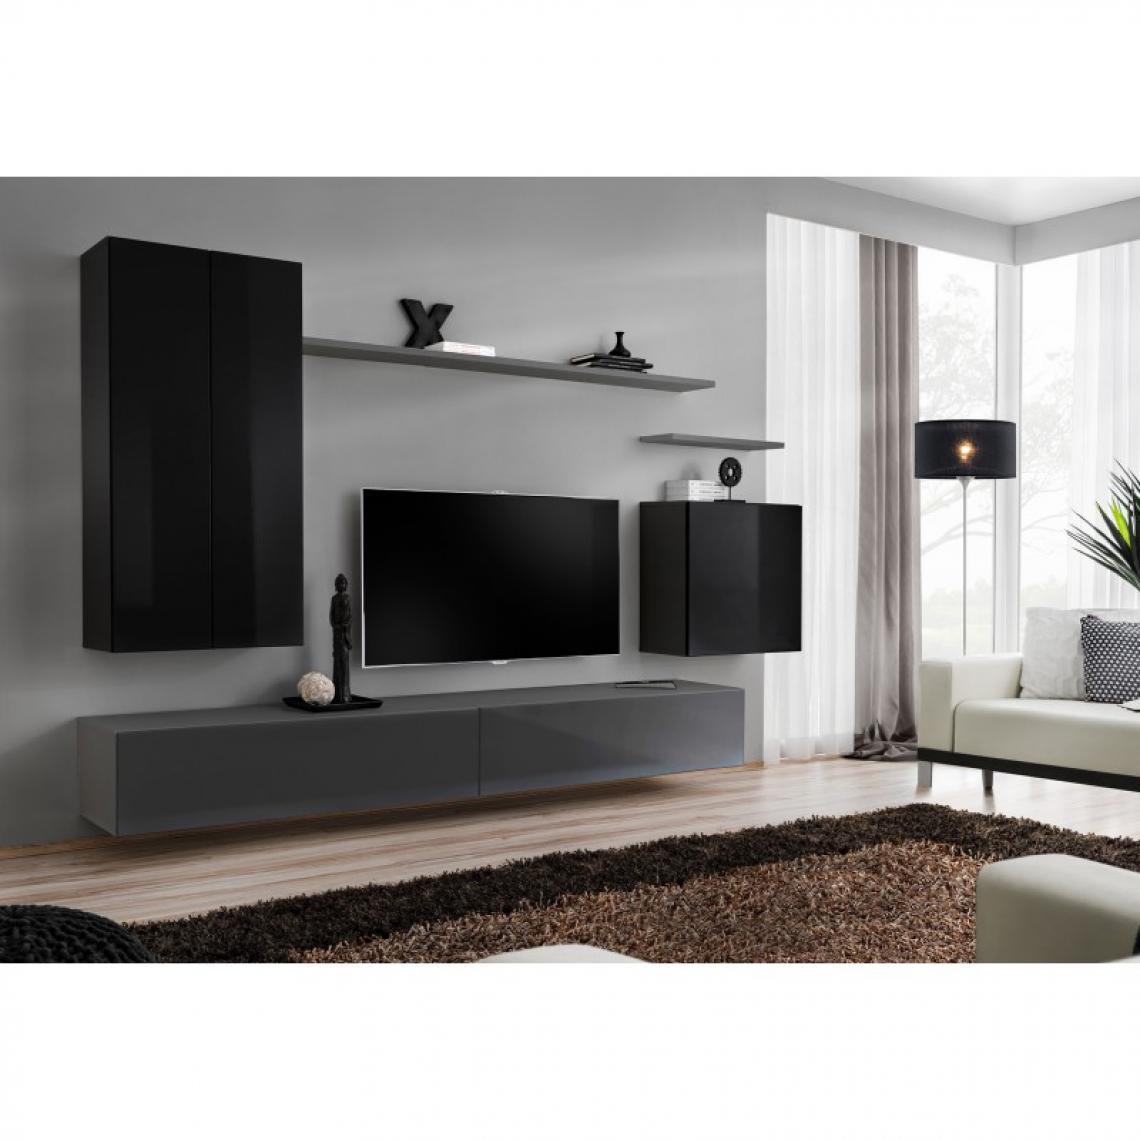 Ac-Deco - Meuble TV Mural Design Switch II 270cm Noir & Gris - Meubles TV, Hi-Fi